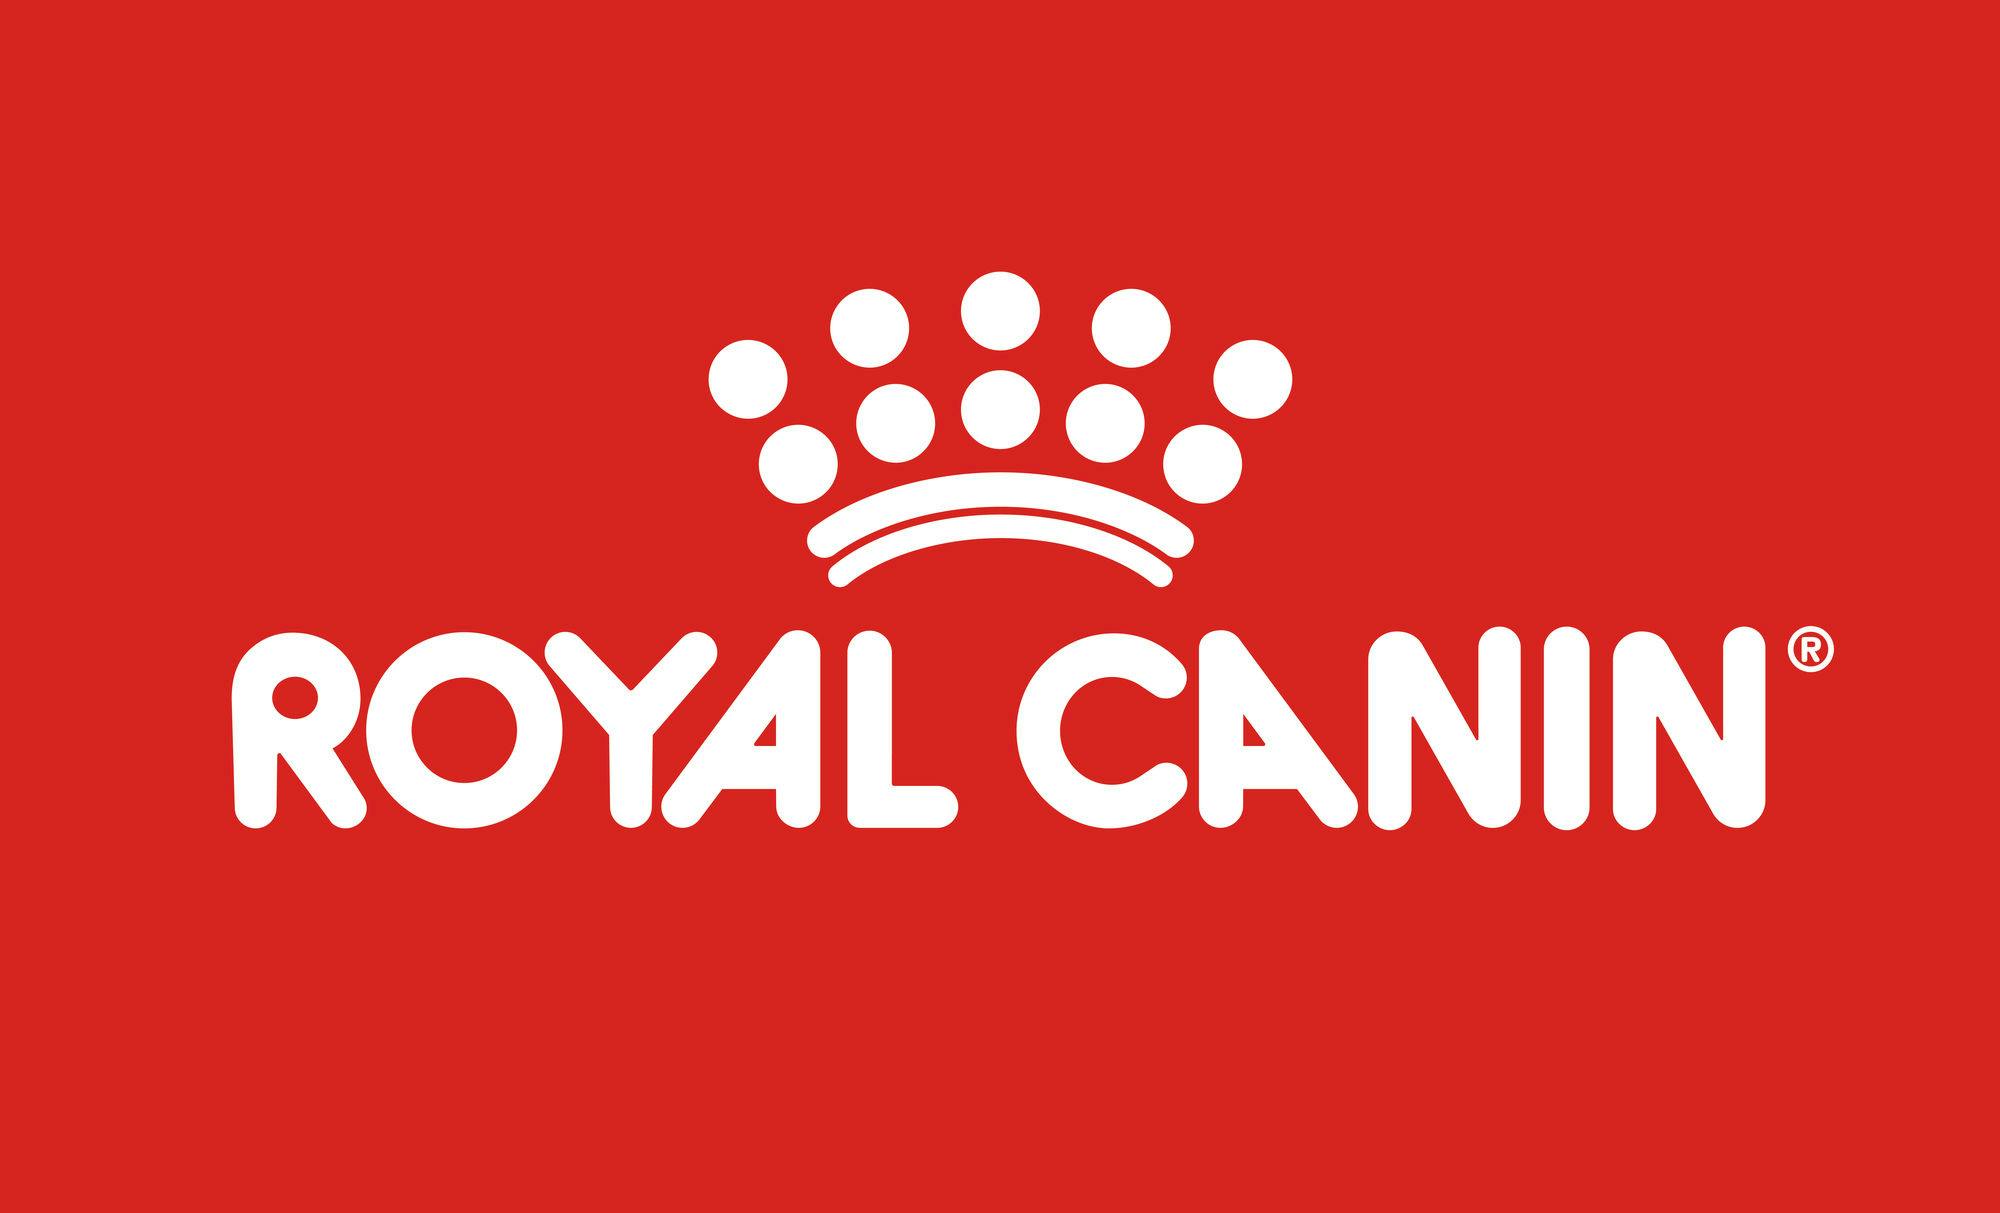 www.royalcanin.com